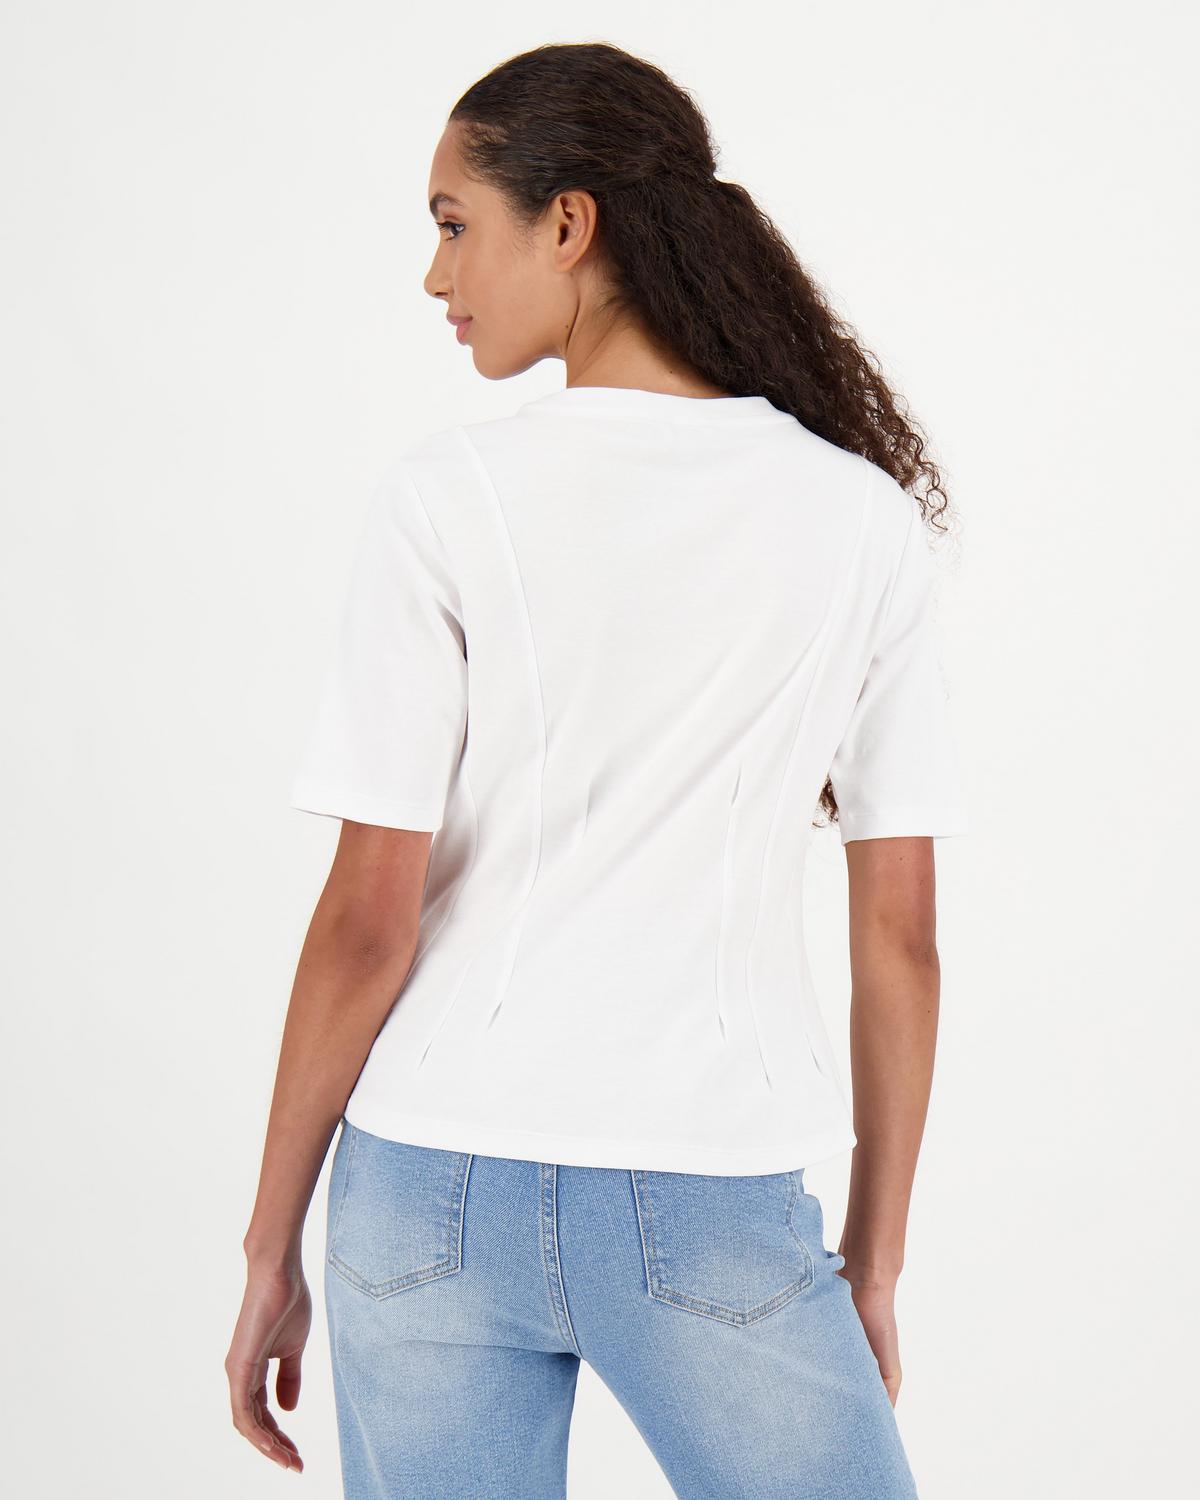 Demie Knit T-Shirt -  white